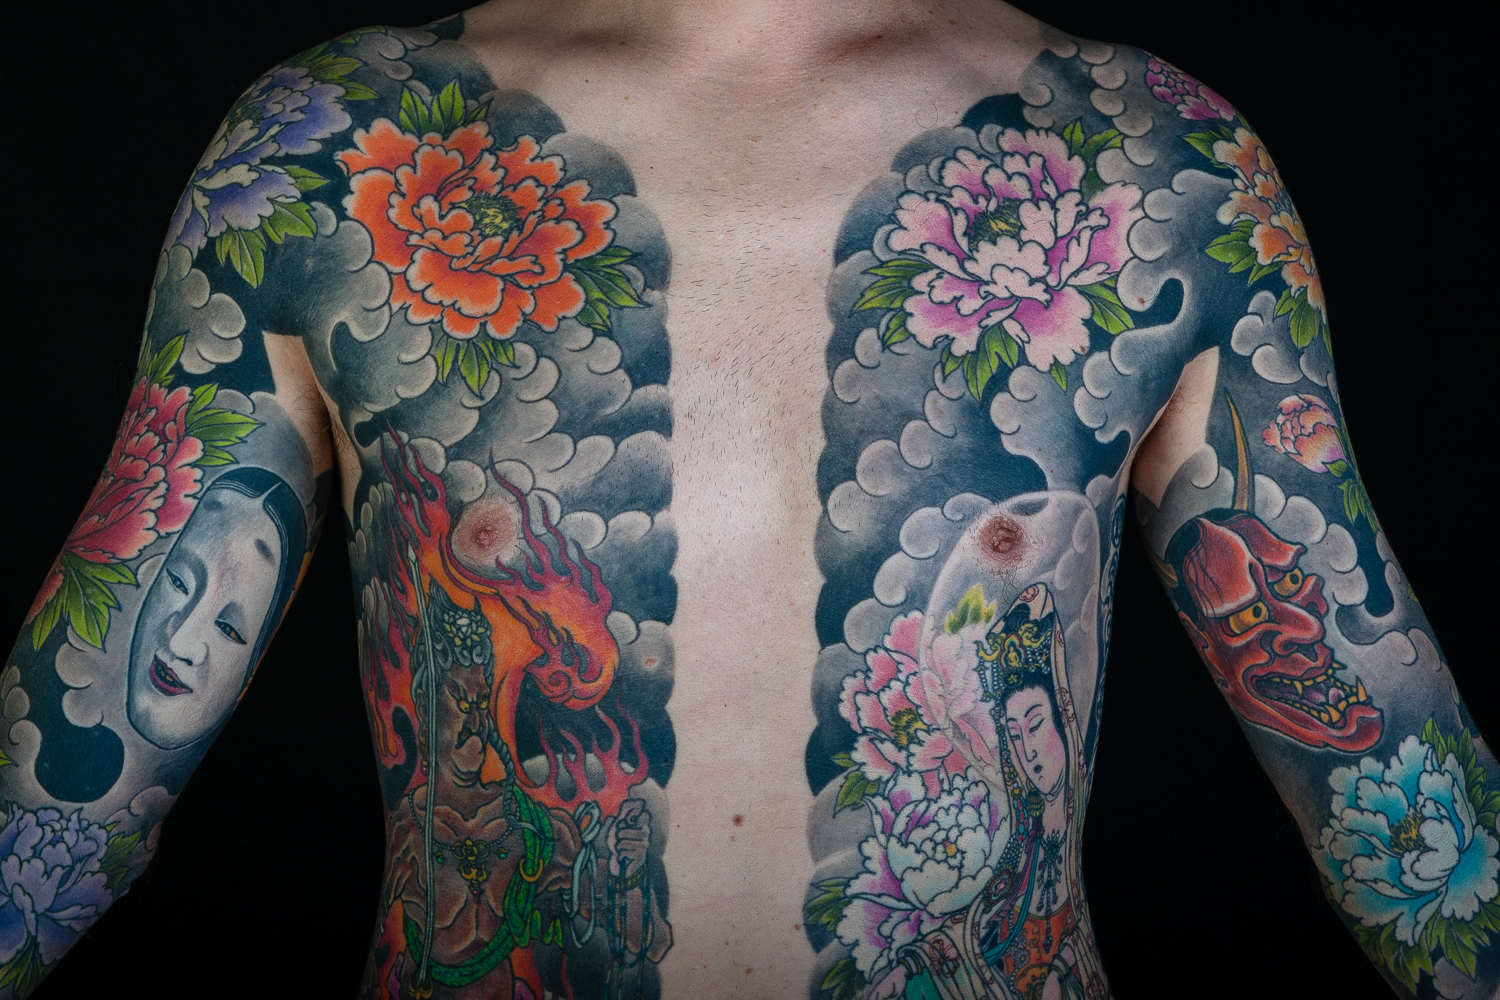 MICK - the works of a legendary tattoo artist.